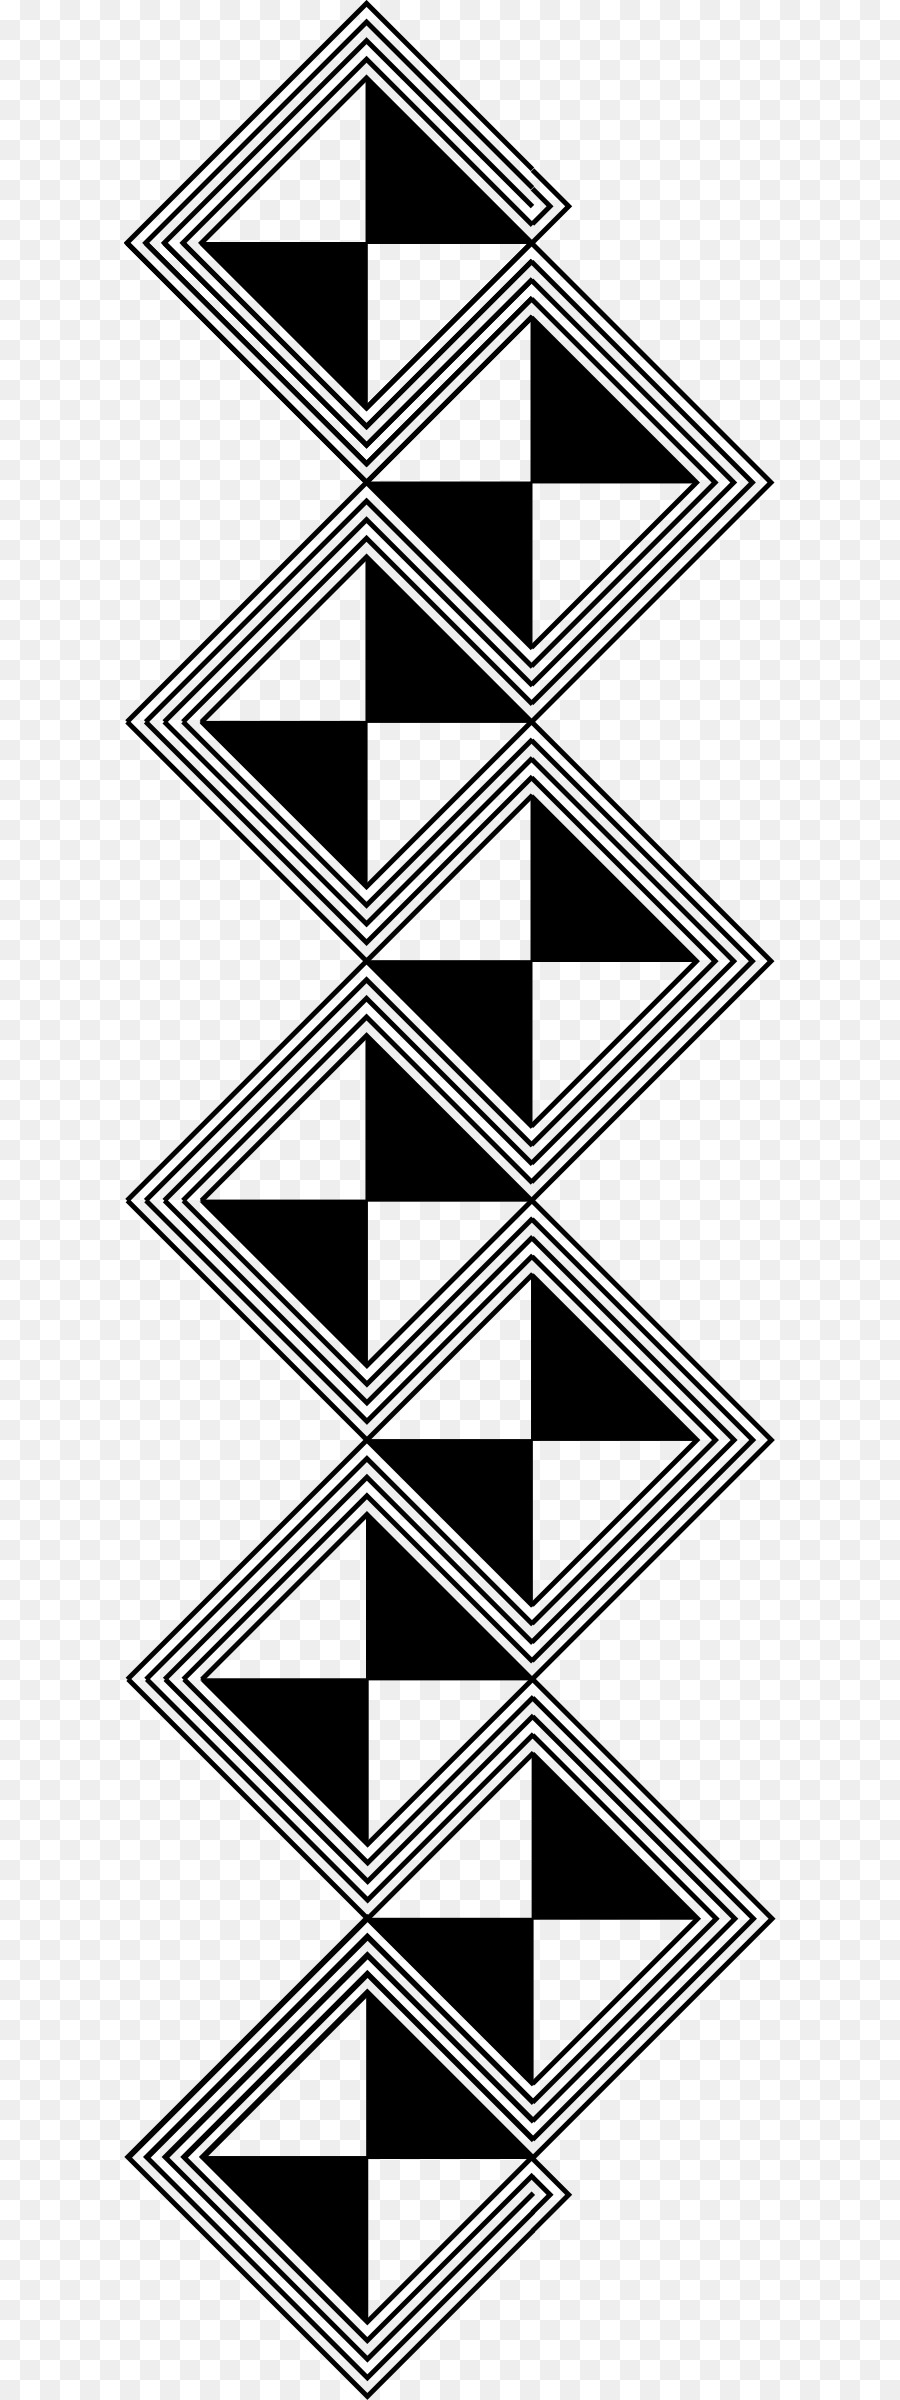 Computer Icons Clip art - geometrische Muster